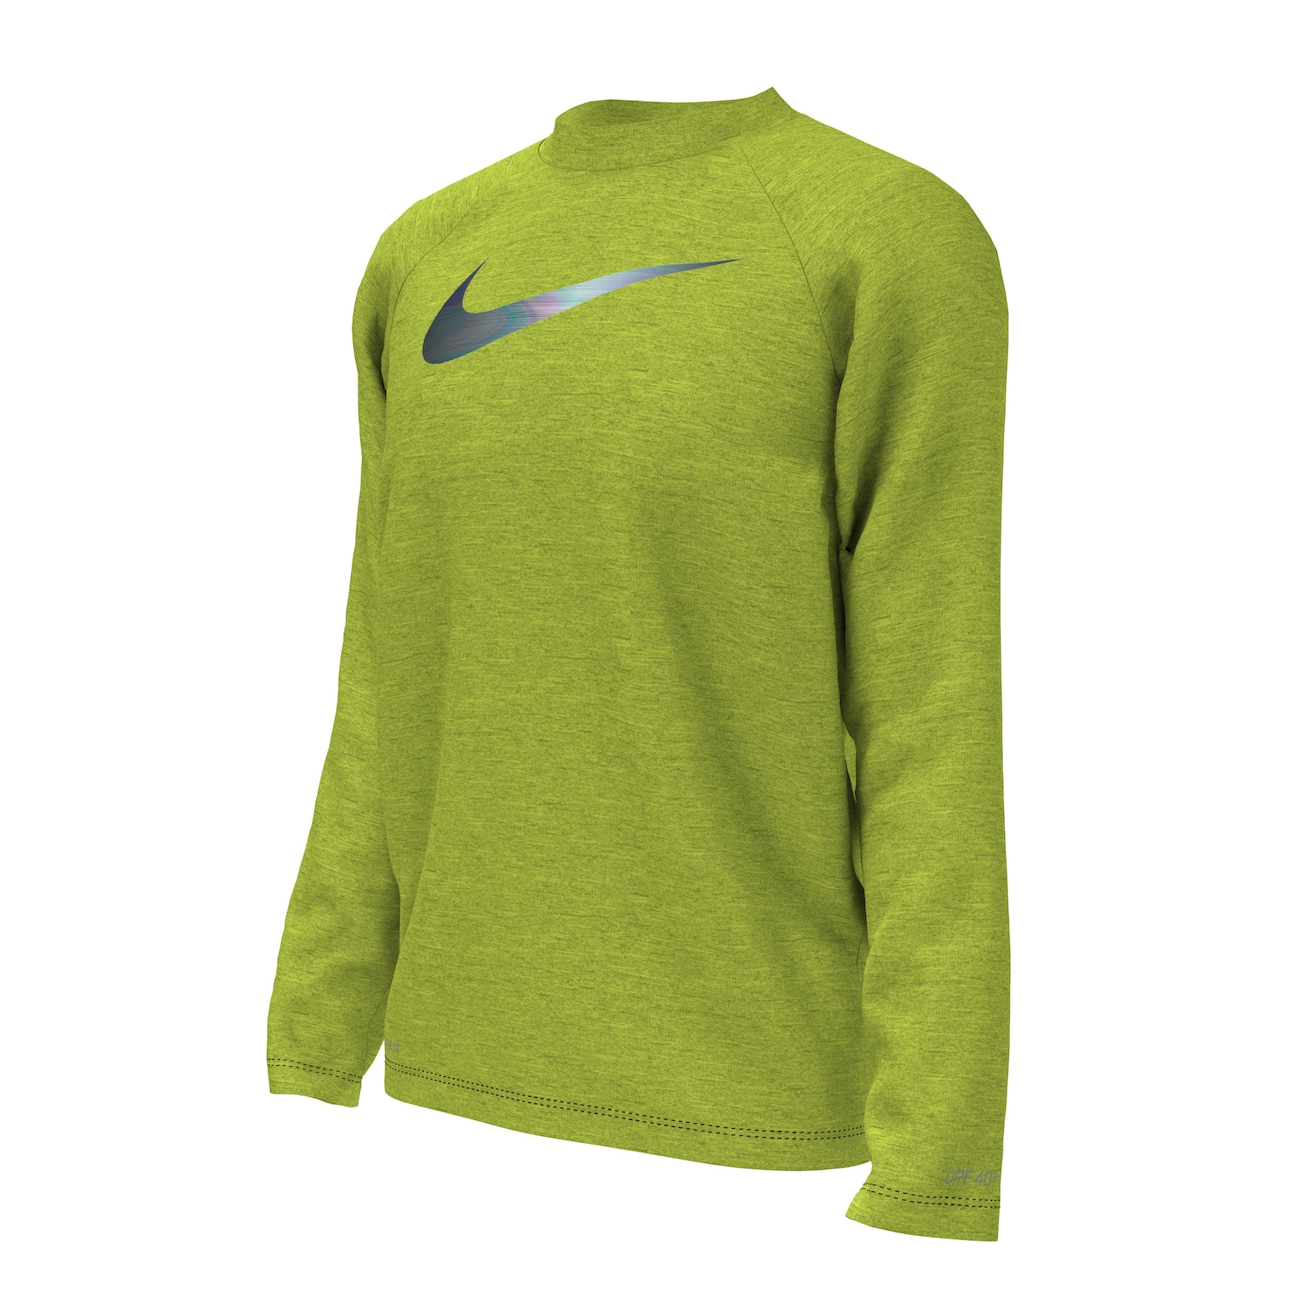 Camiseta Nike UV Hydroguard Infantil